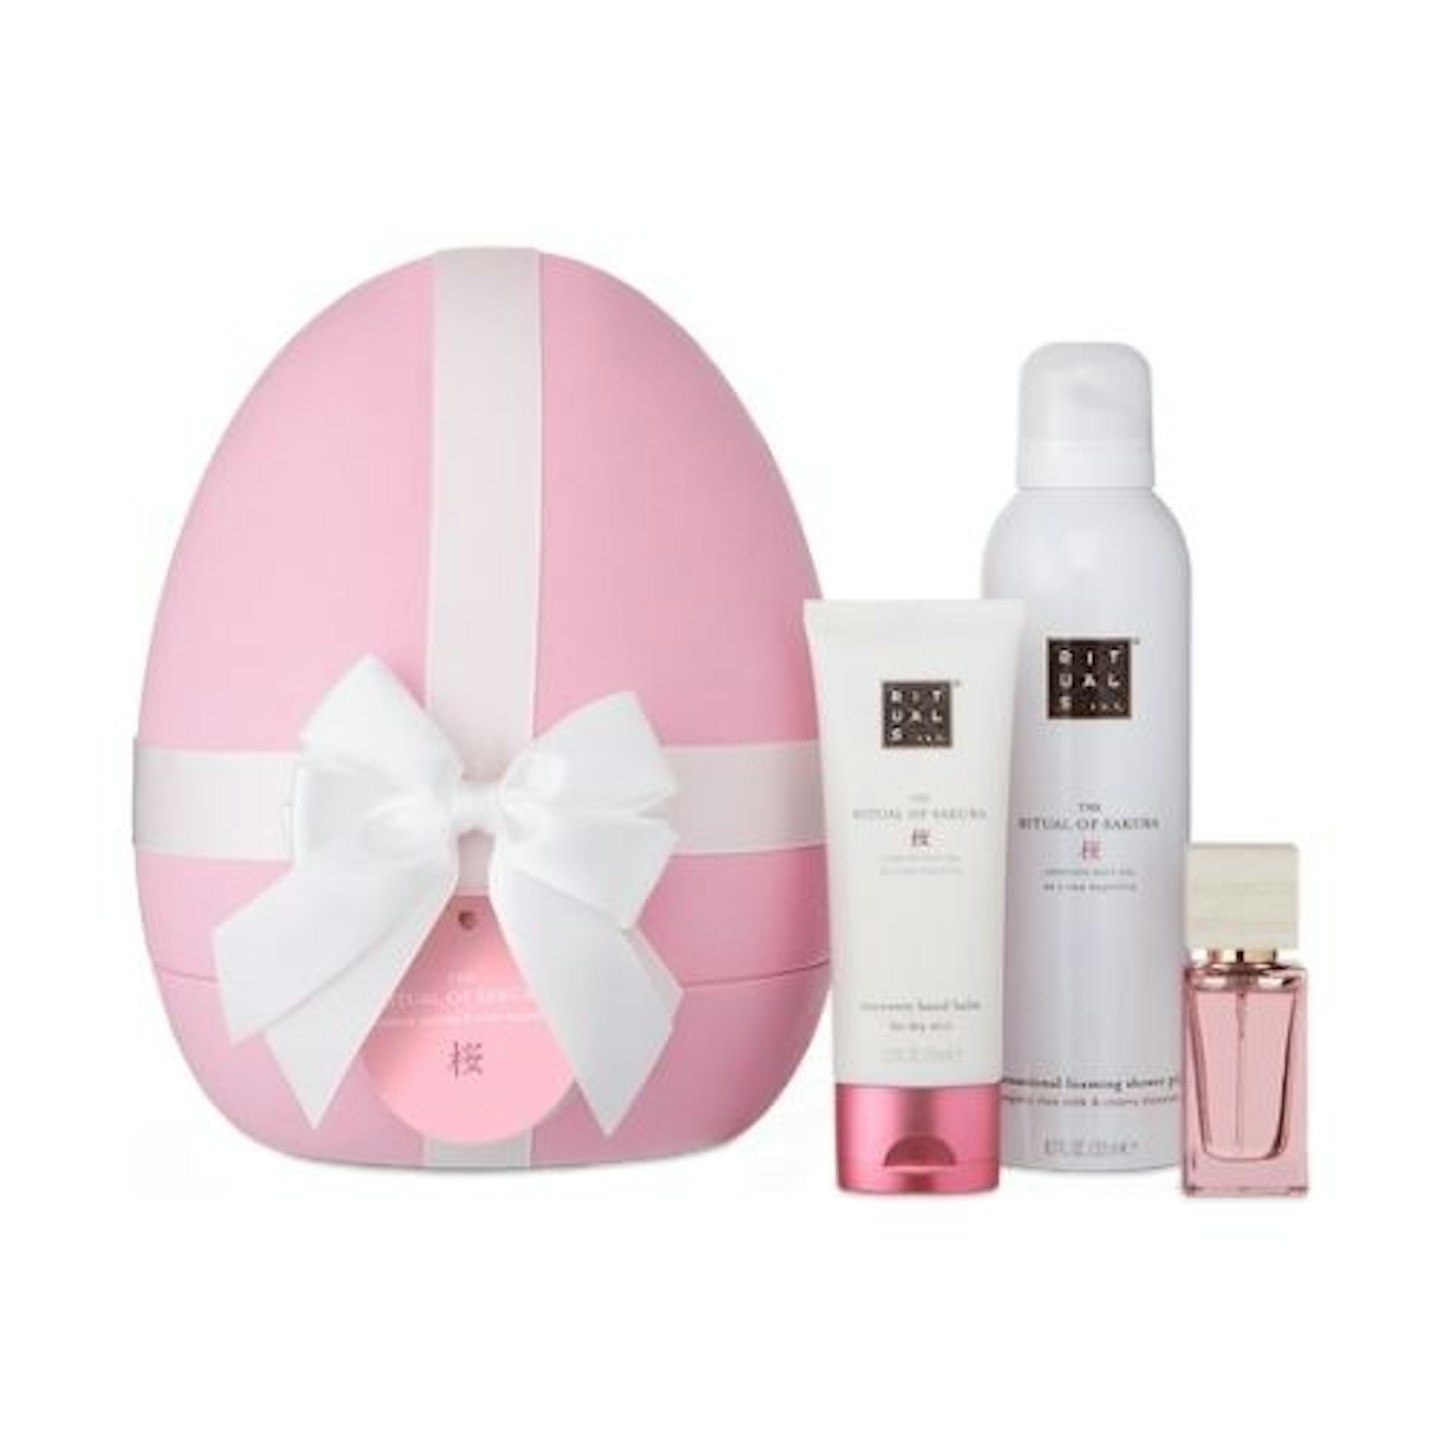 THE RITUAL OF SAKURA, Easter Egg Gift Set